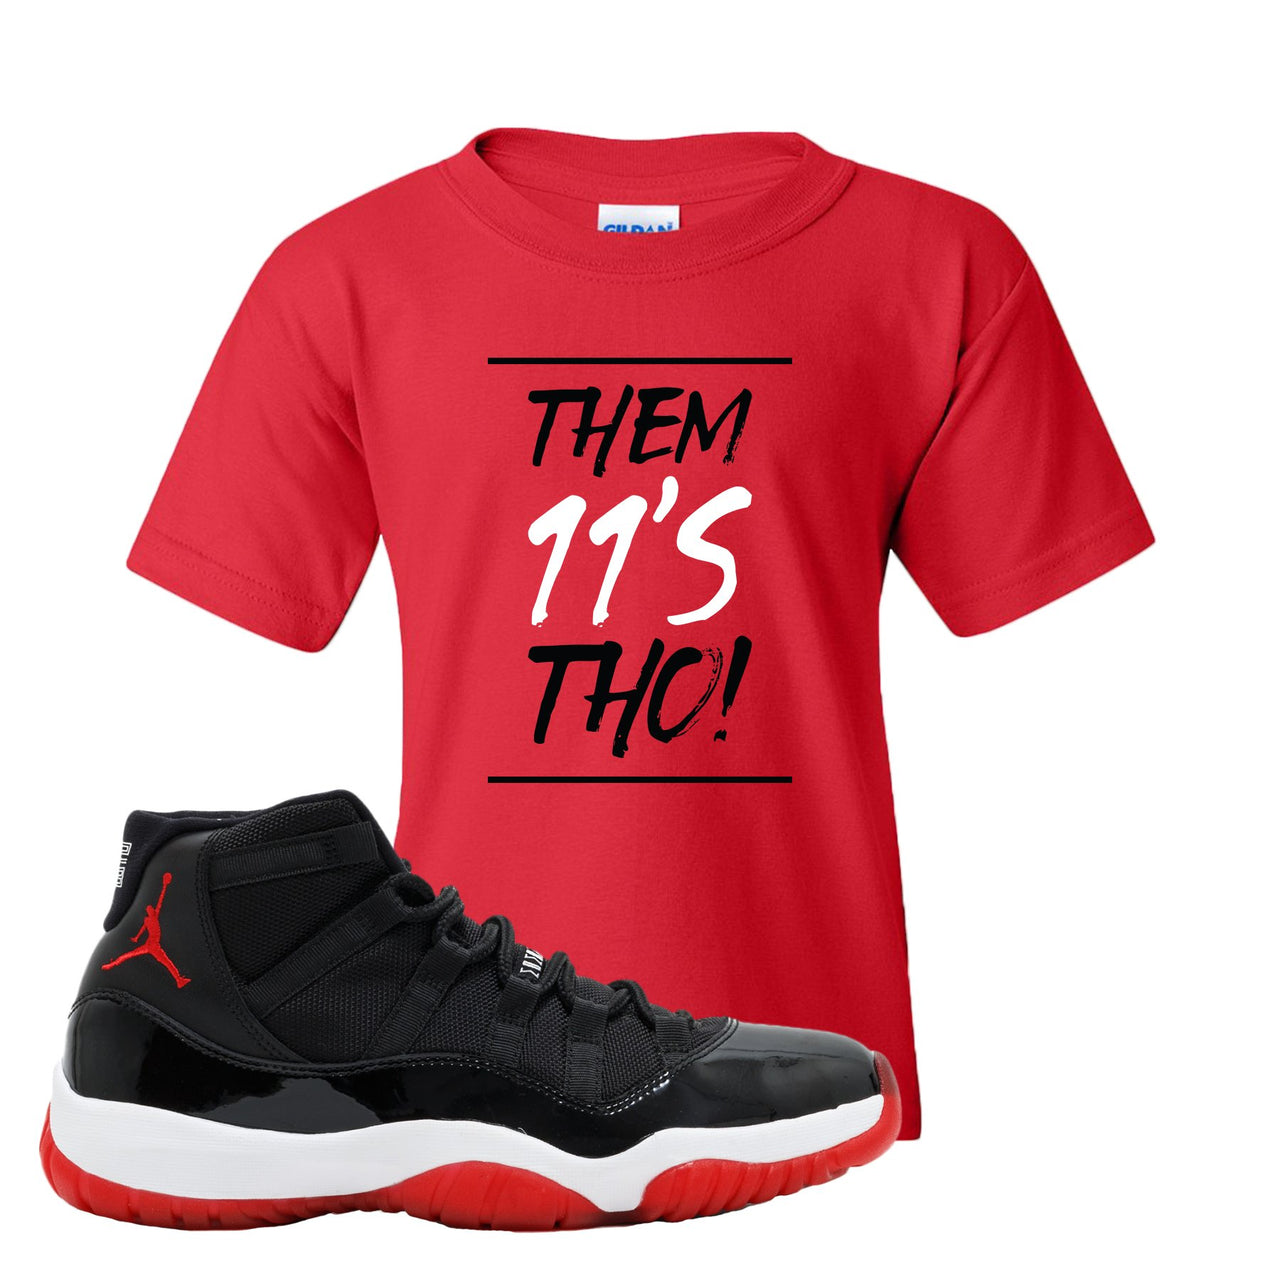 Jordan 11 Bred Them 11s Tho! Red Sneaker Hook Up Kid's T-Shirt